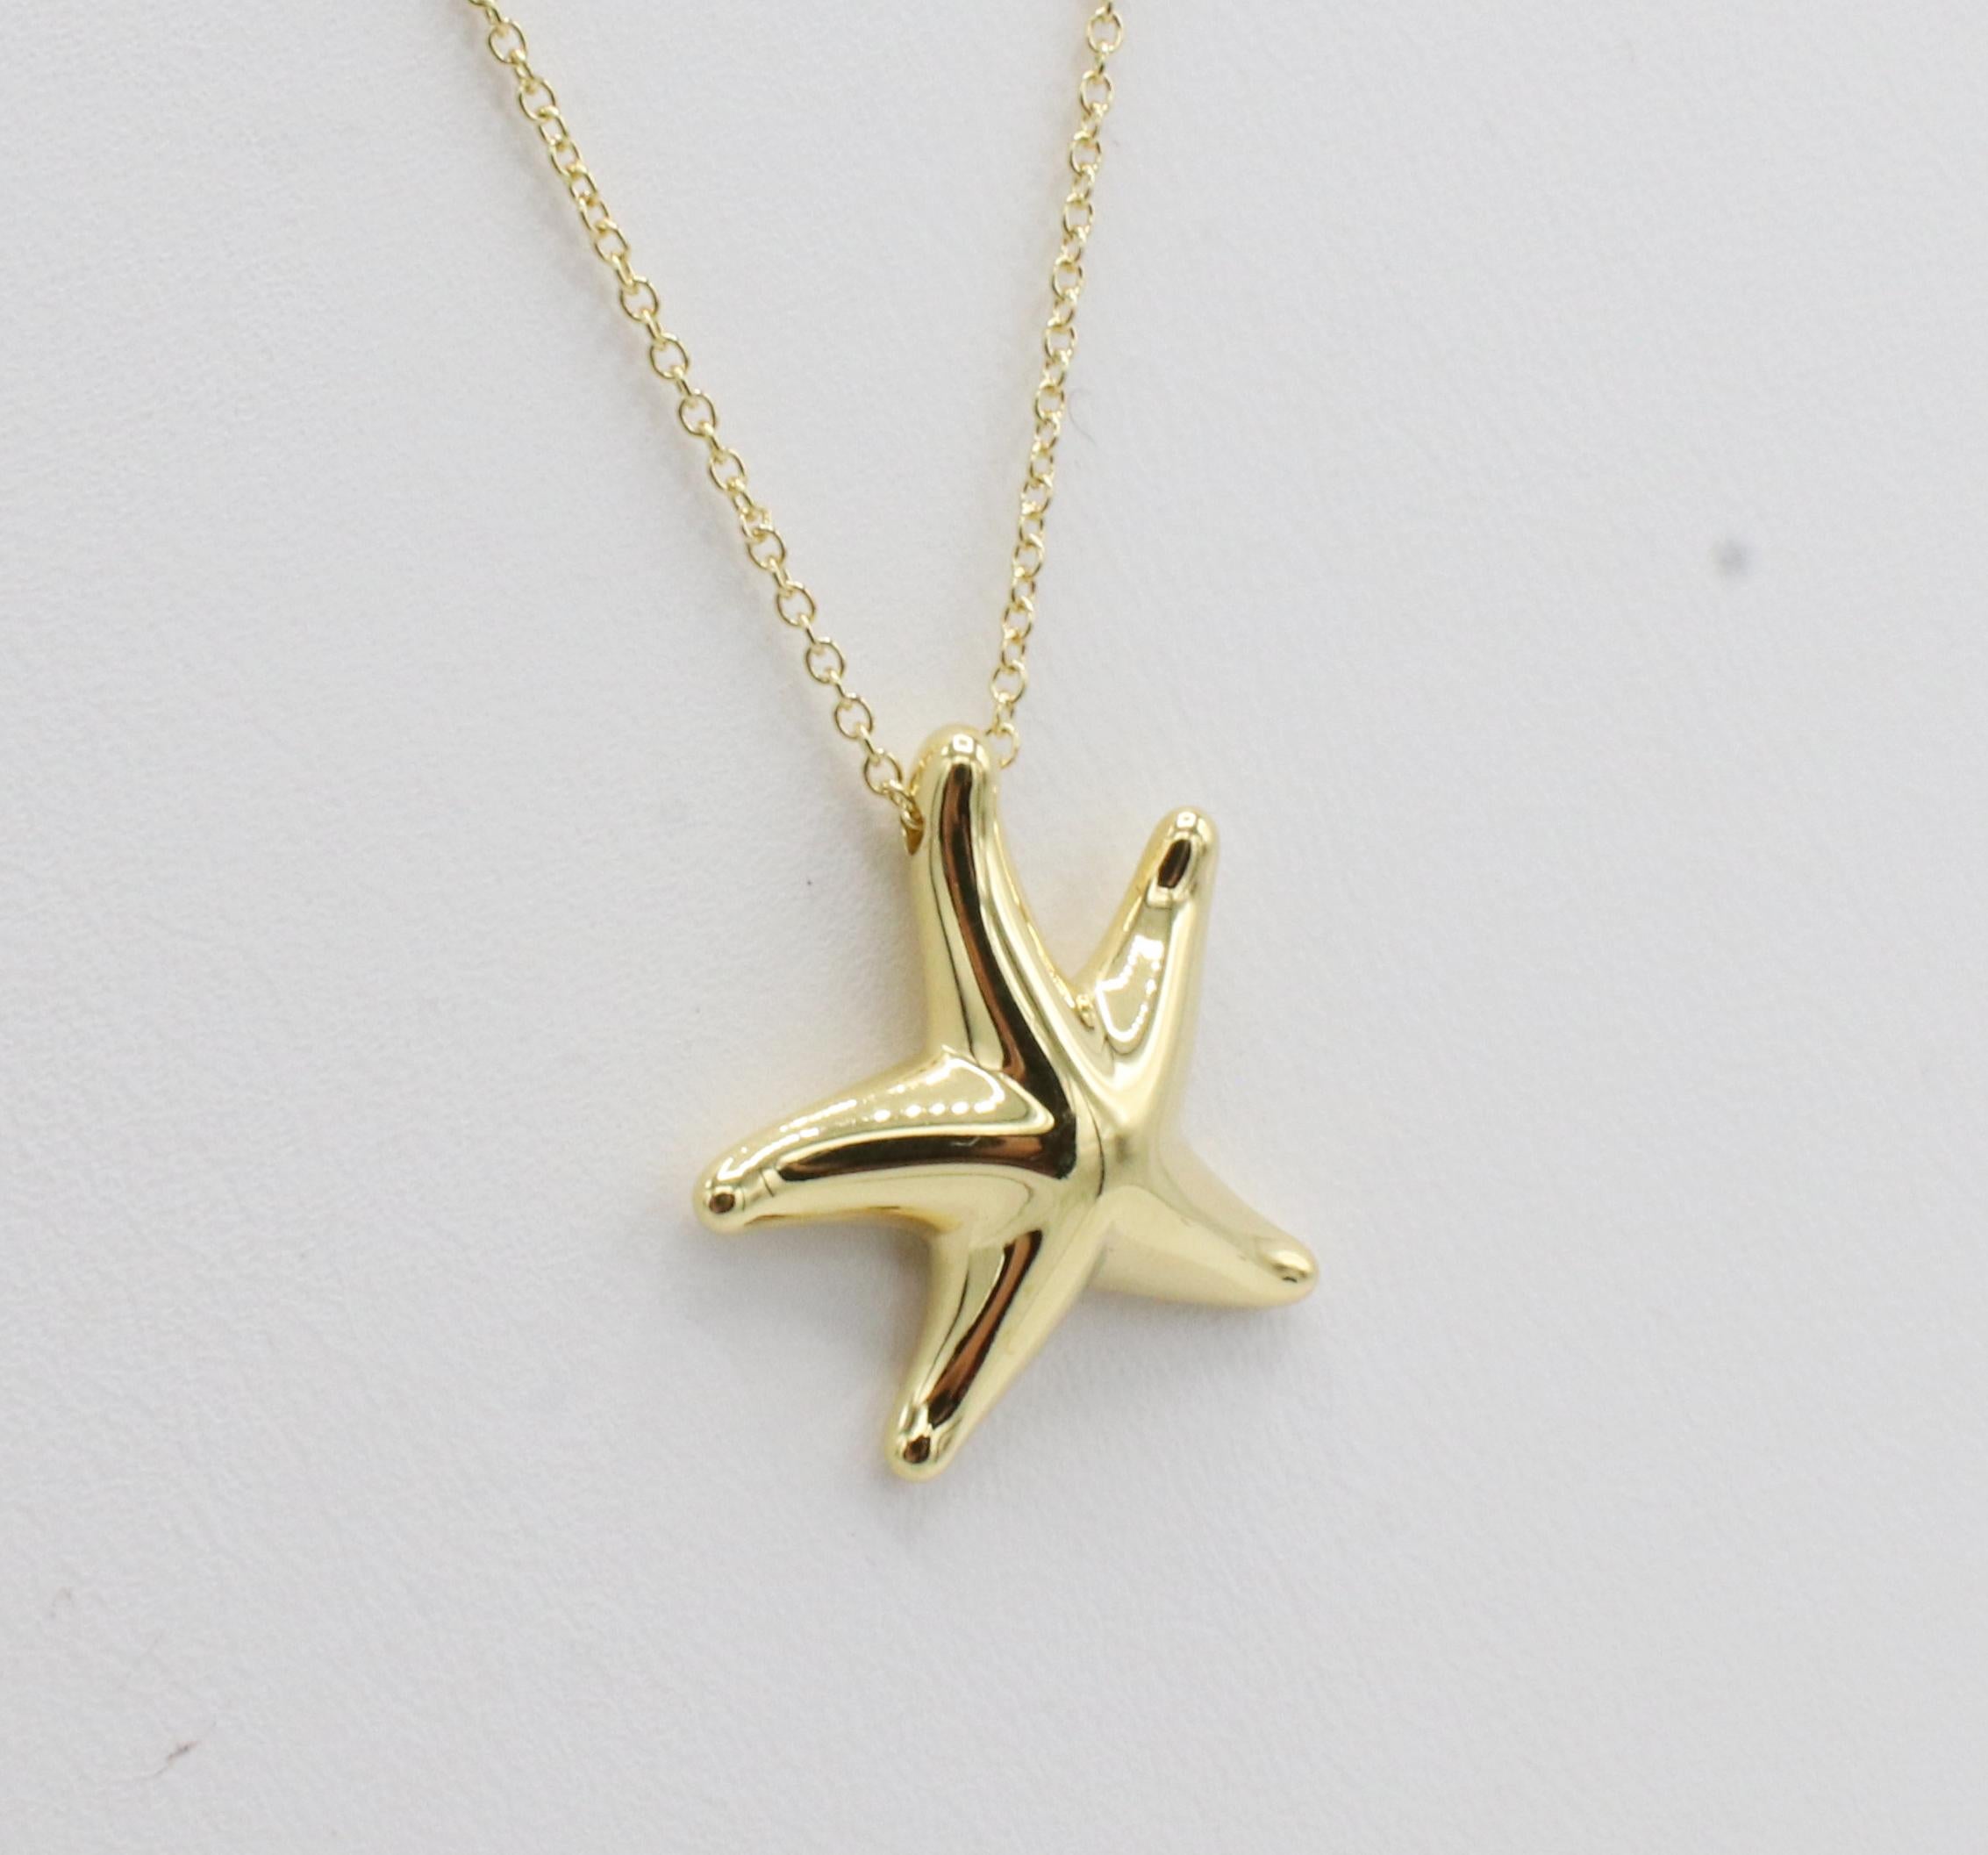 Tiffany & Co. Elsa Peretti 18 Karat Yellow Gold Starfish Pendant Necklace 
Metal: 18k yellow gold
Weight: 4.10 grams
Pendant: 15 x 14mm 
Chain: 16 inches
